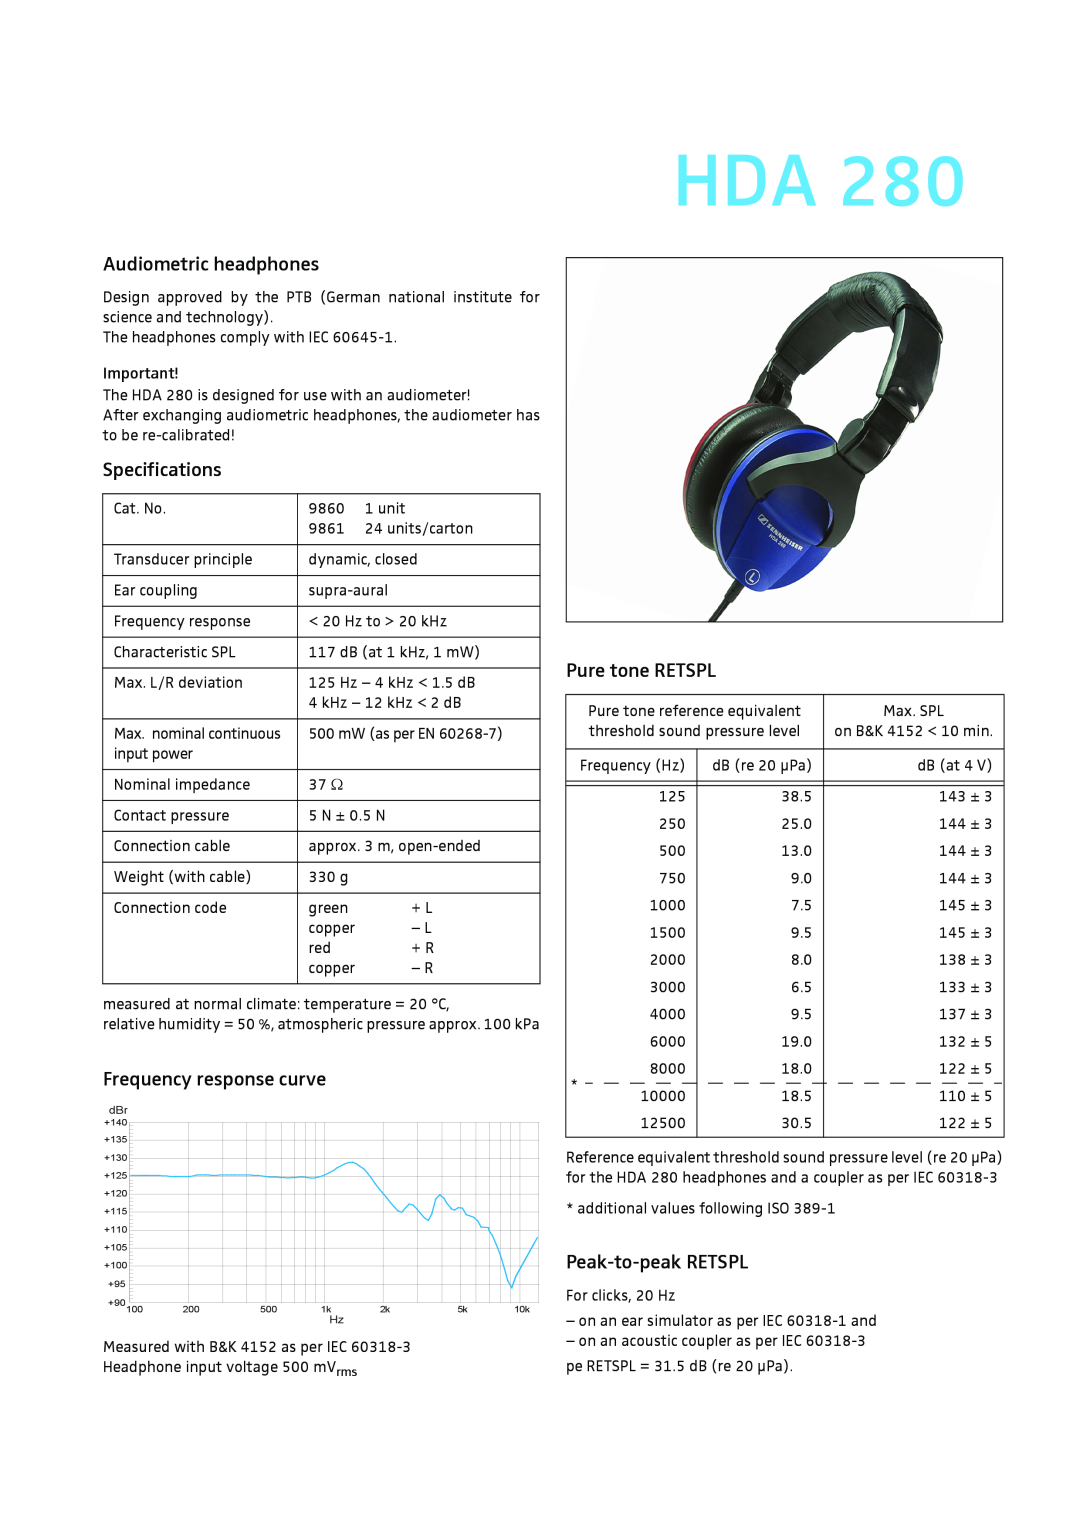 Sennheiser HDA 280 Audiometric headphones, Specifications, Frequency response curve, Pure tone RETSPL, Peak-to-peakRETSPL 